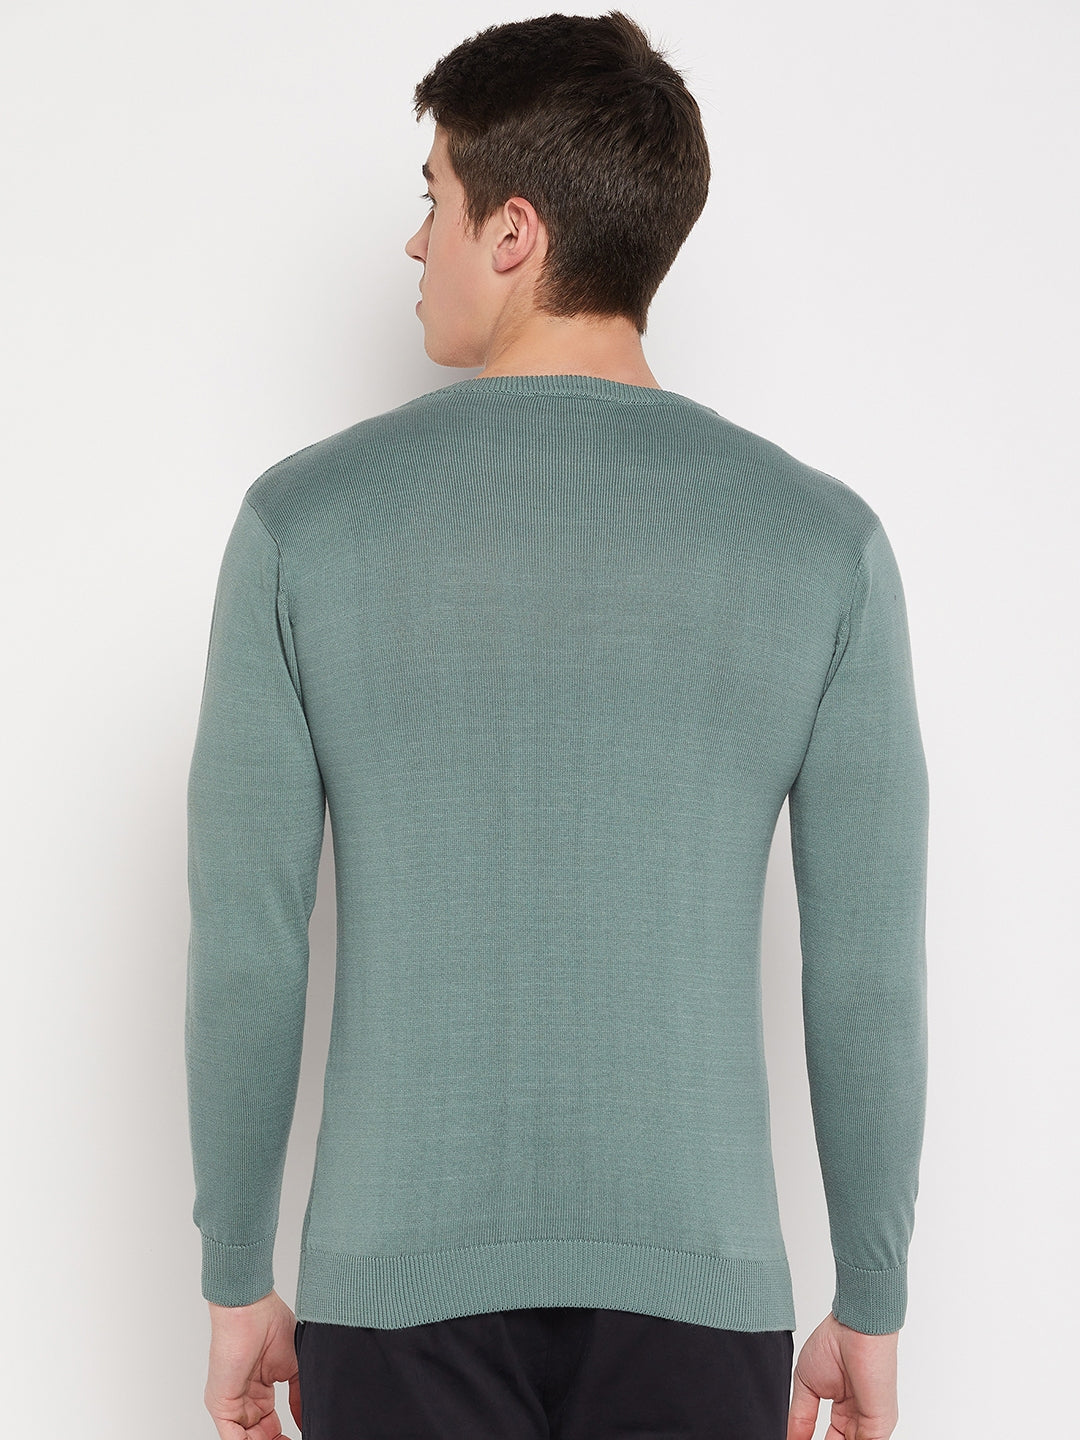 Camla Barcelona Teal Green Sweater For Men